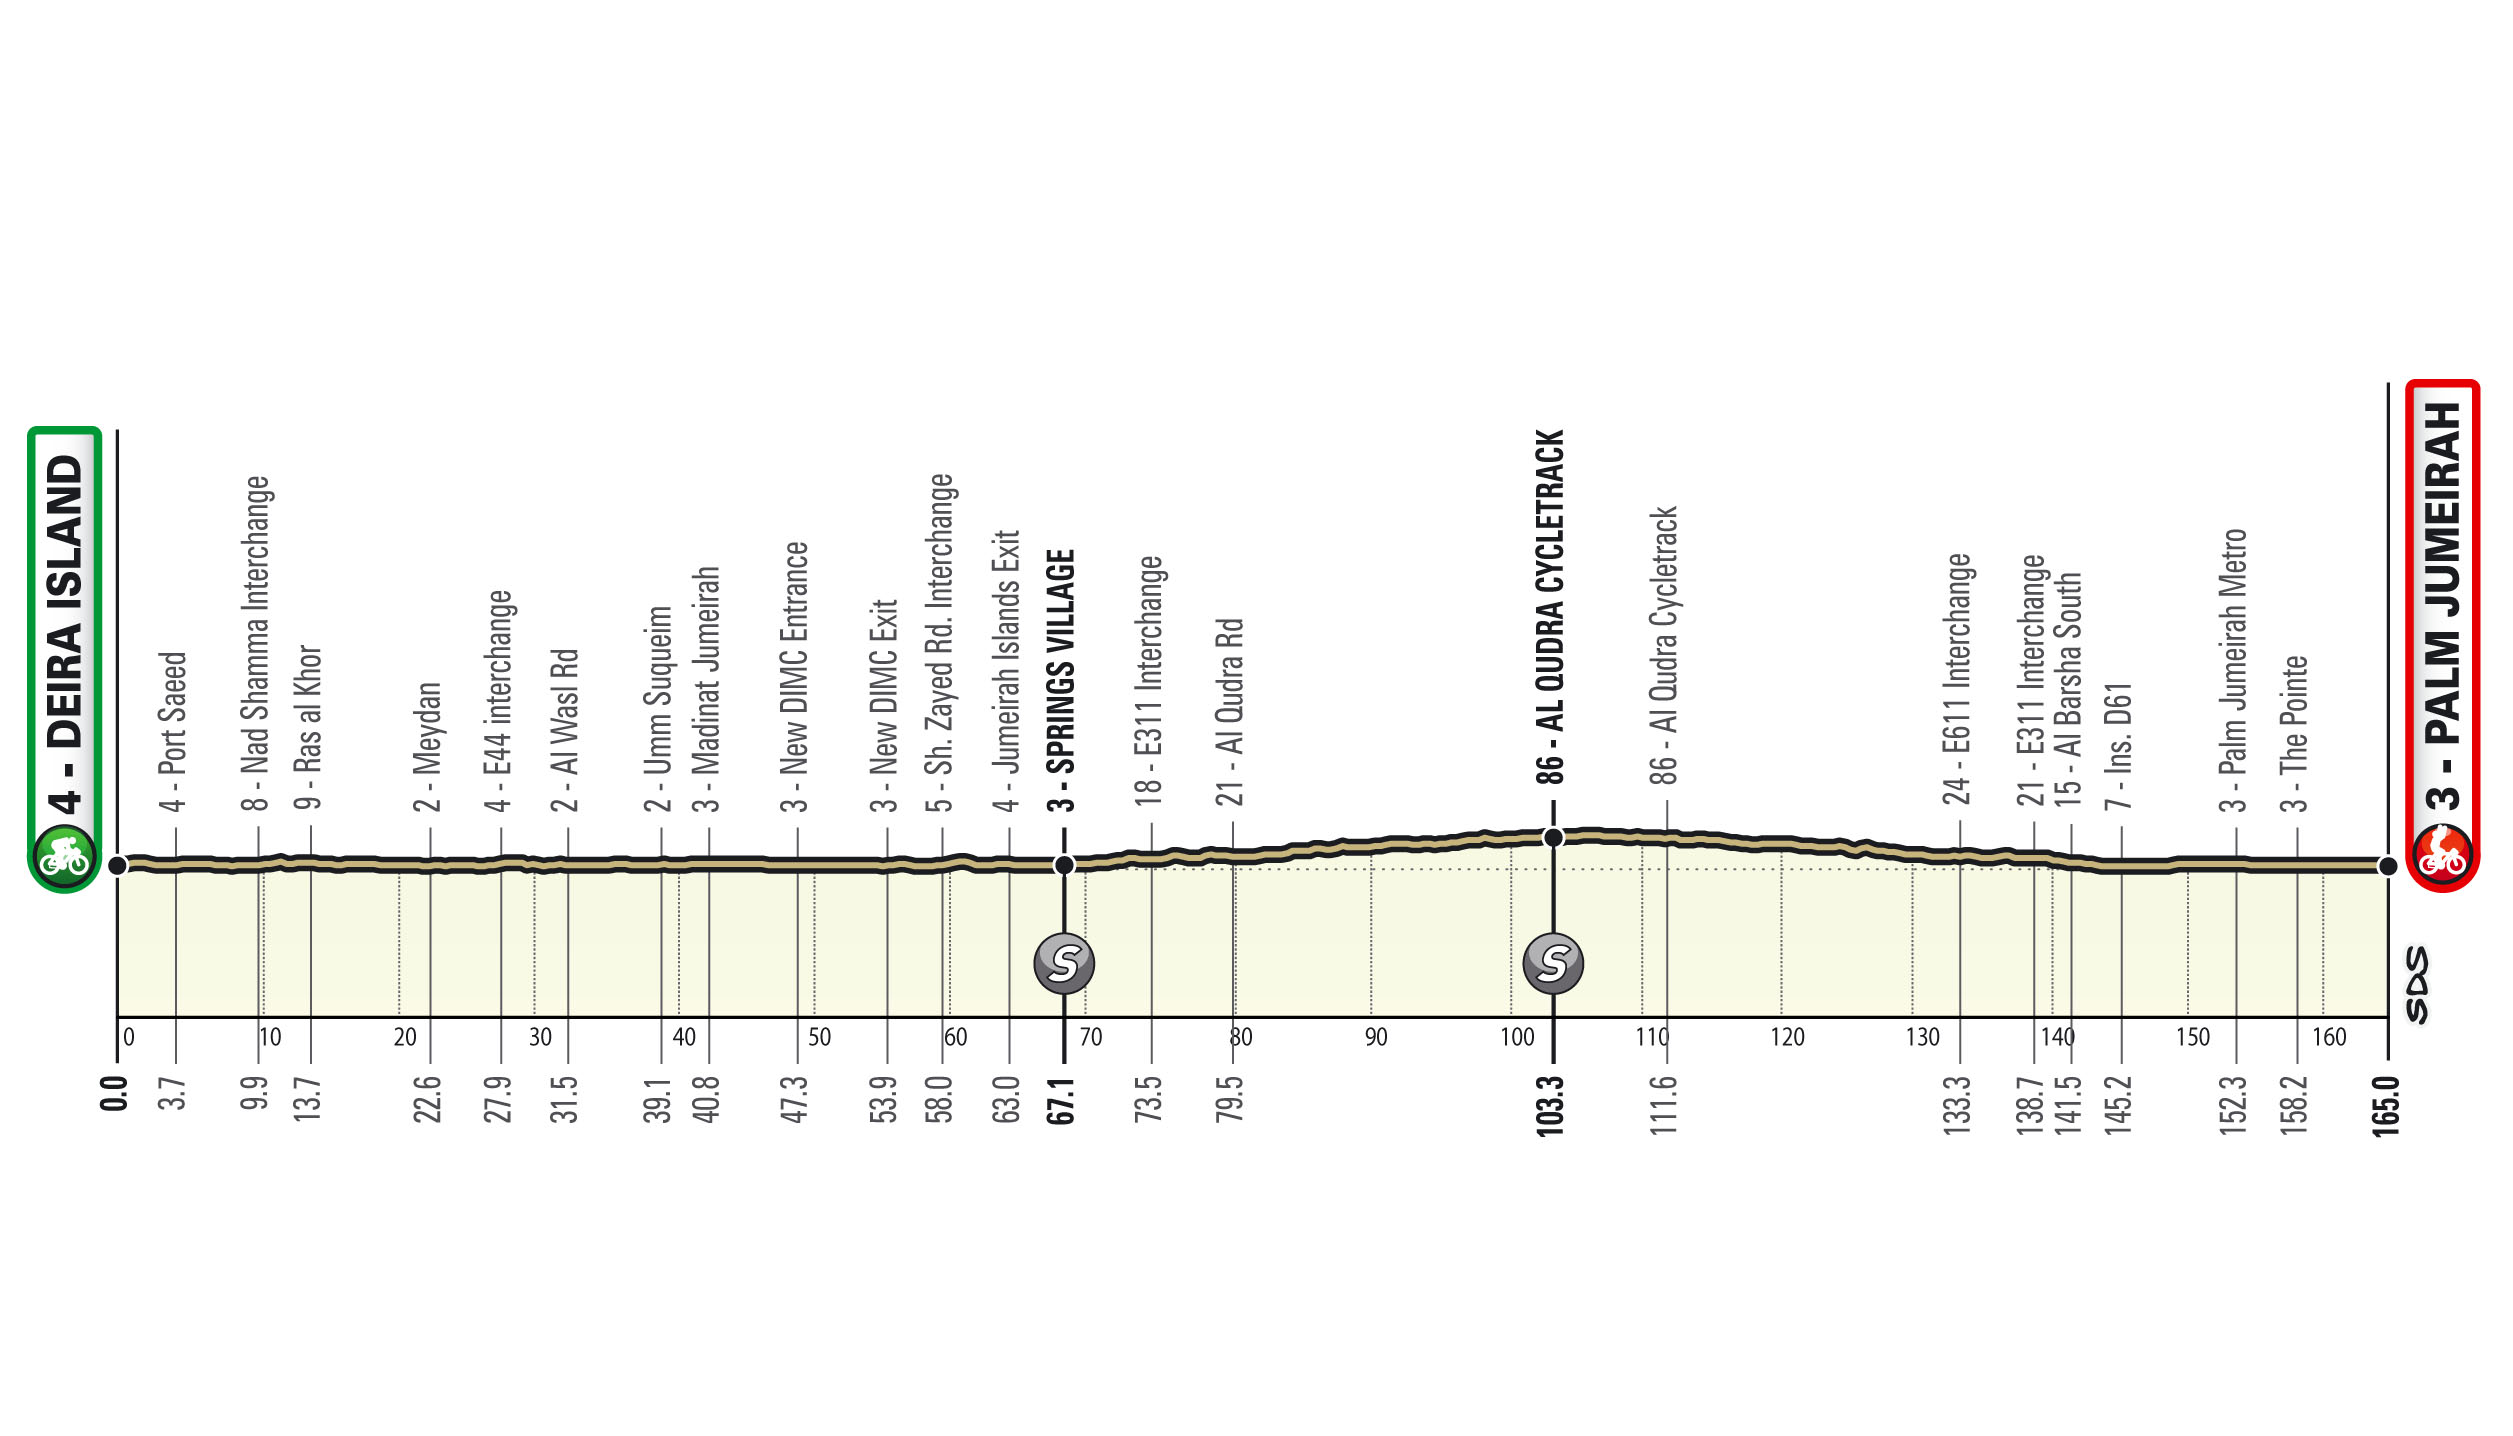 UAE Tour stage 6